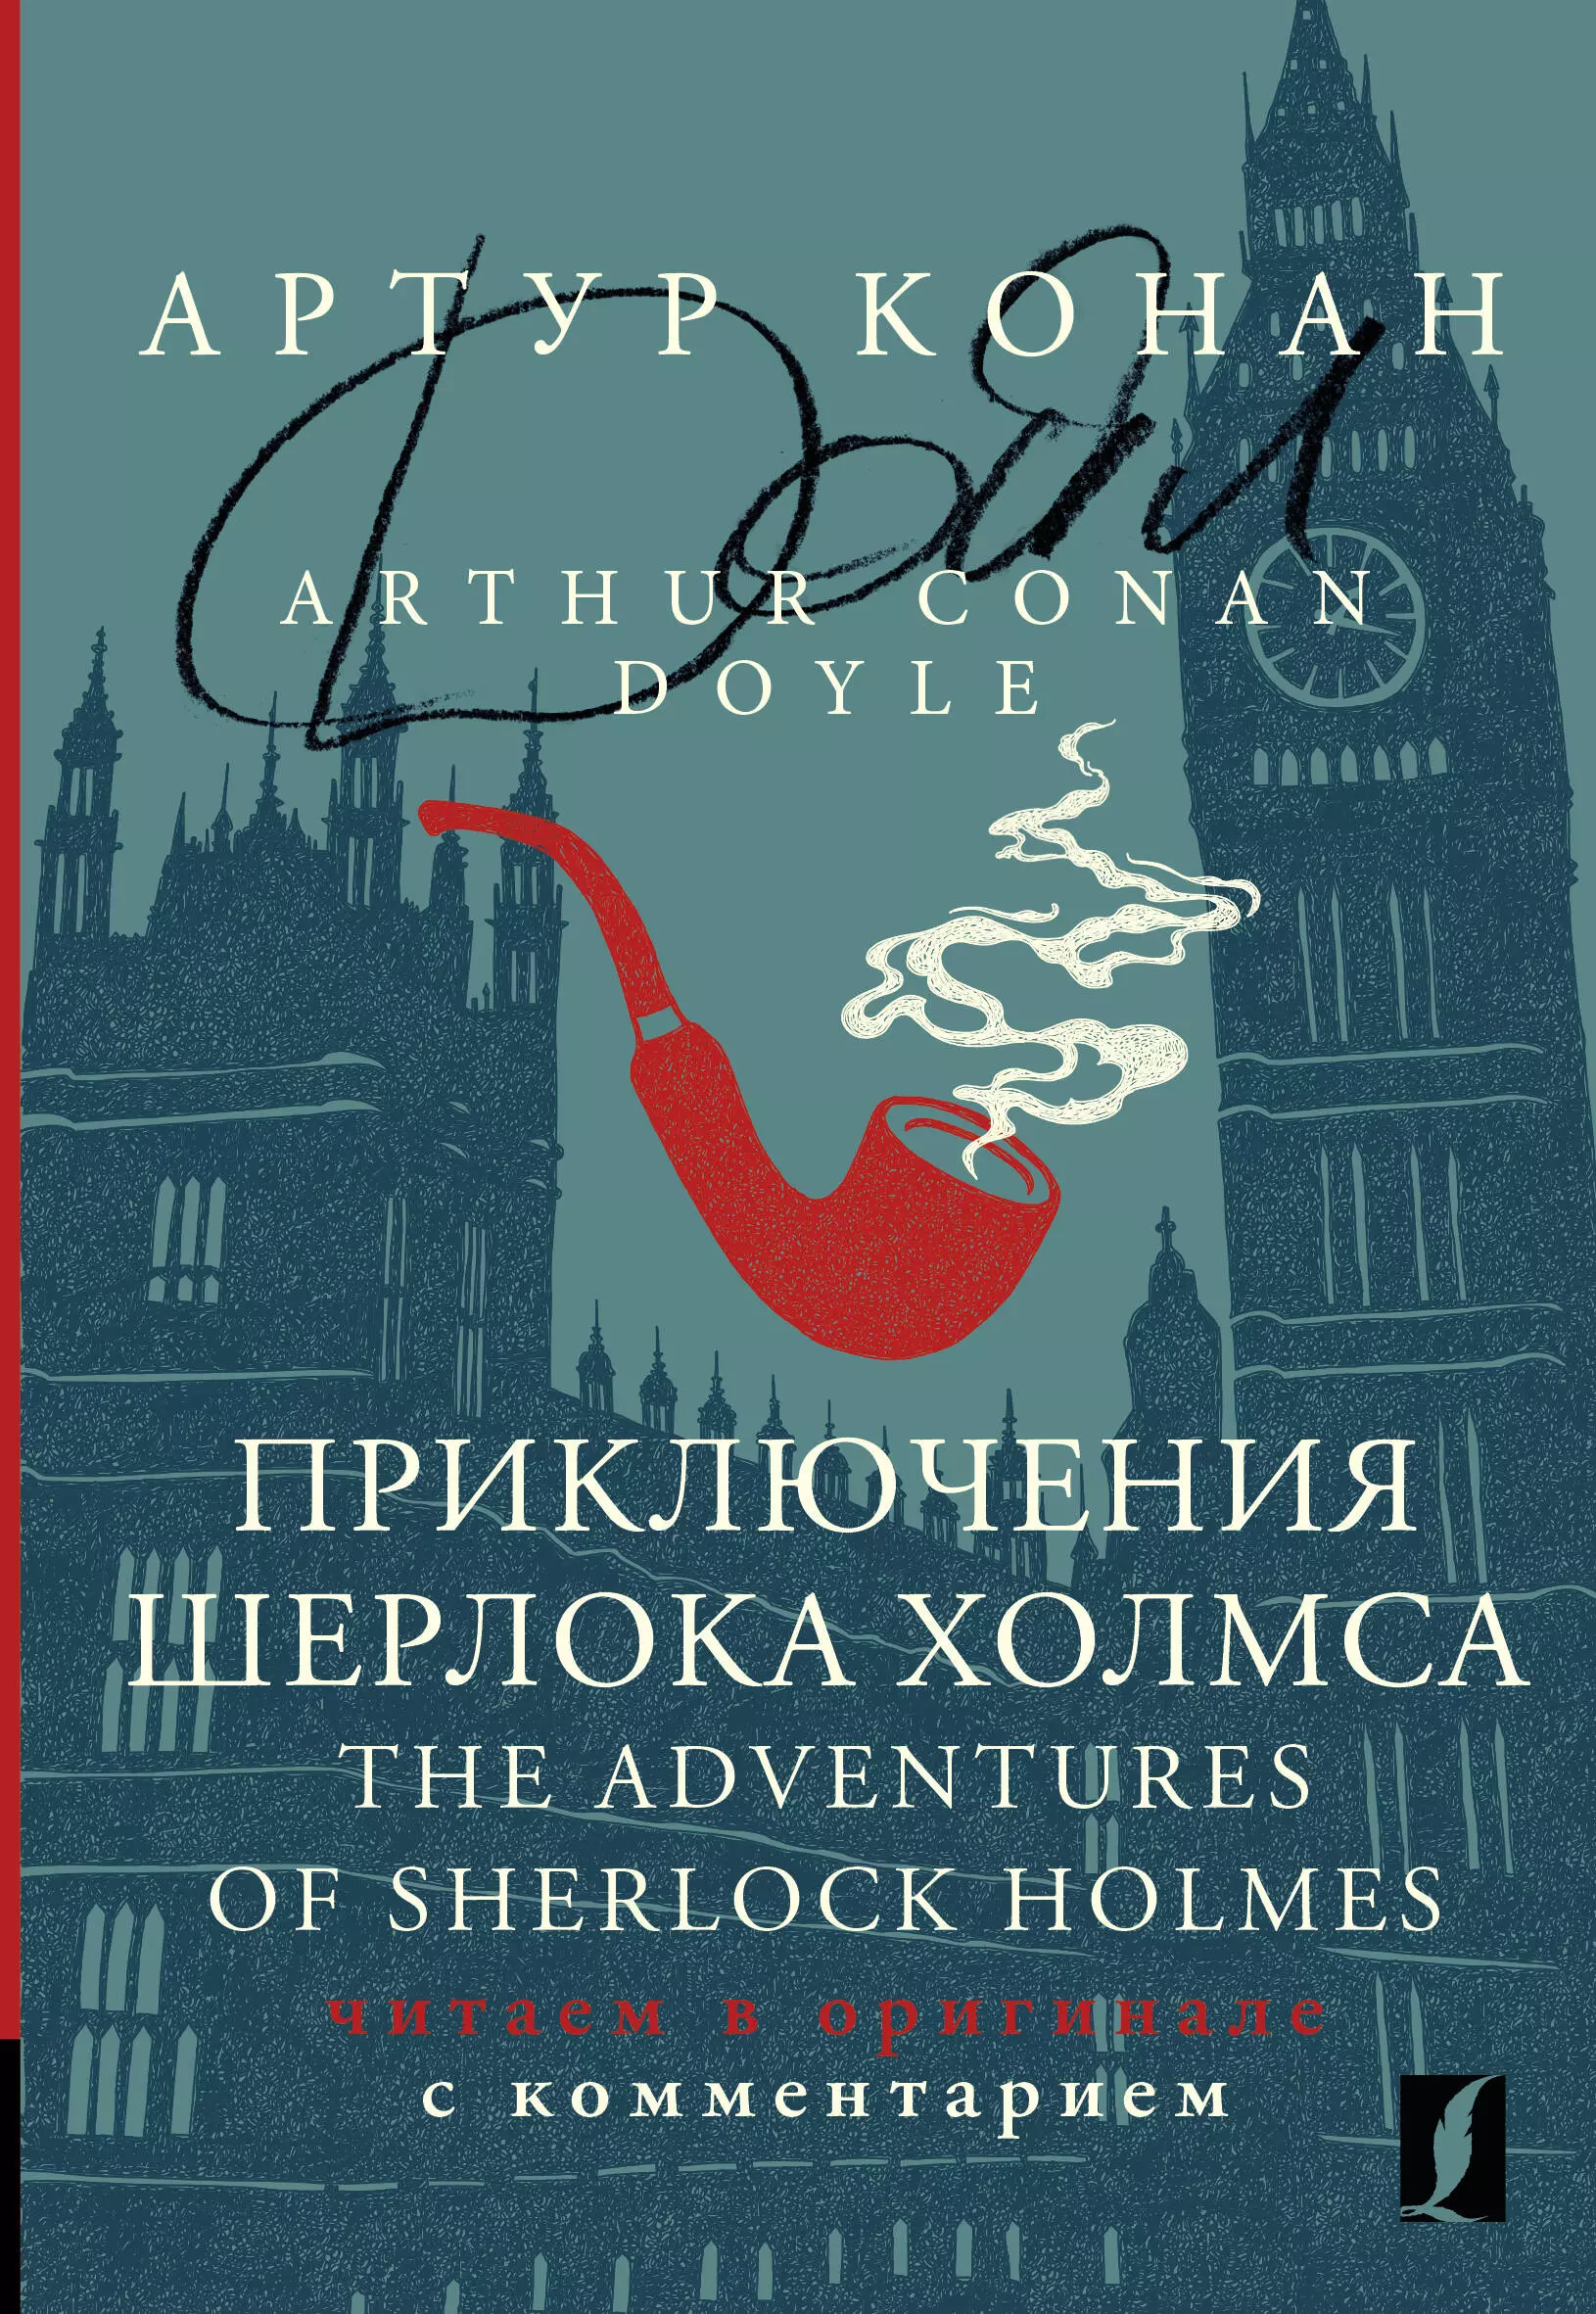 Дойл Артур Конан Приключения Шерлока Холмса / The Adventures of Sherlock Holmes: читаем в оригинале с комментарием дойл артур конан the adventures of sherlock holmes приключения шерлока холмса